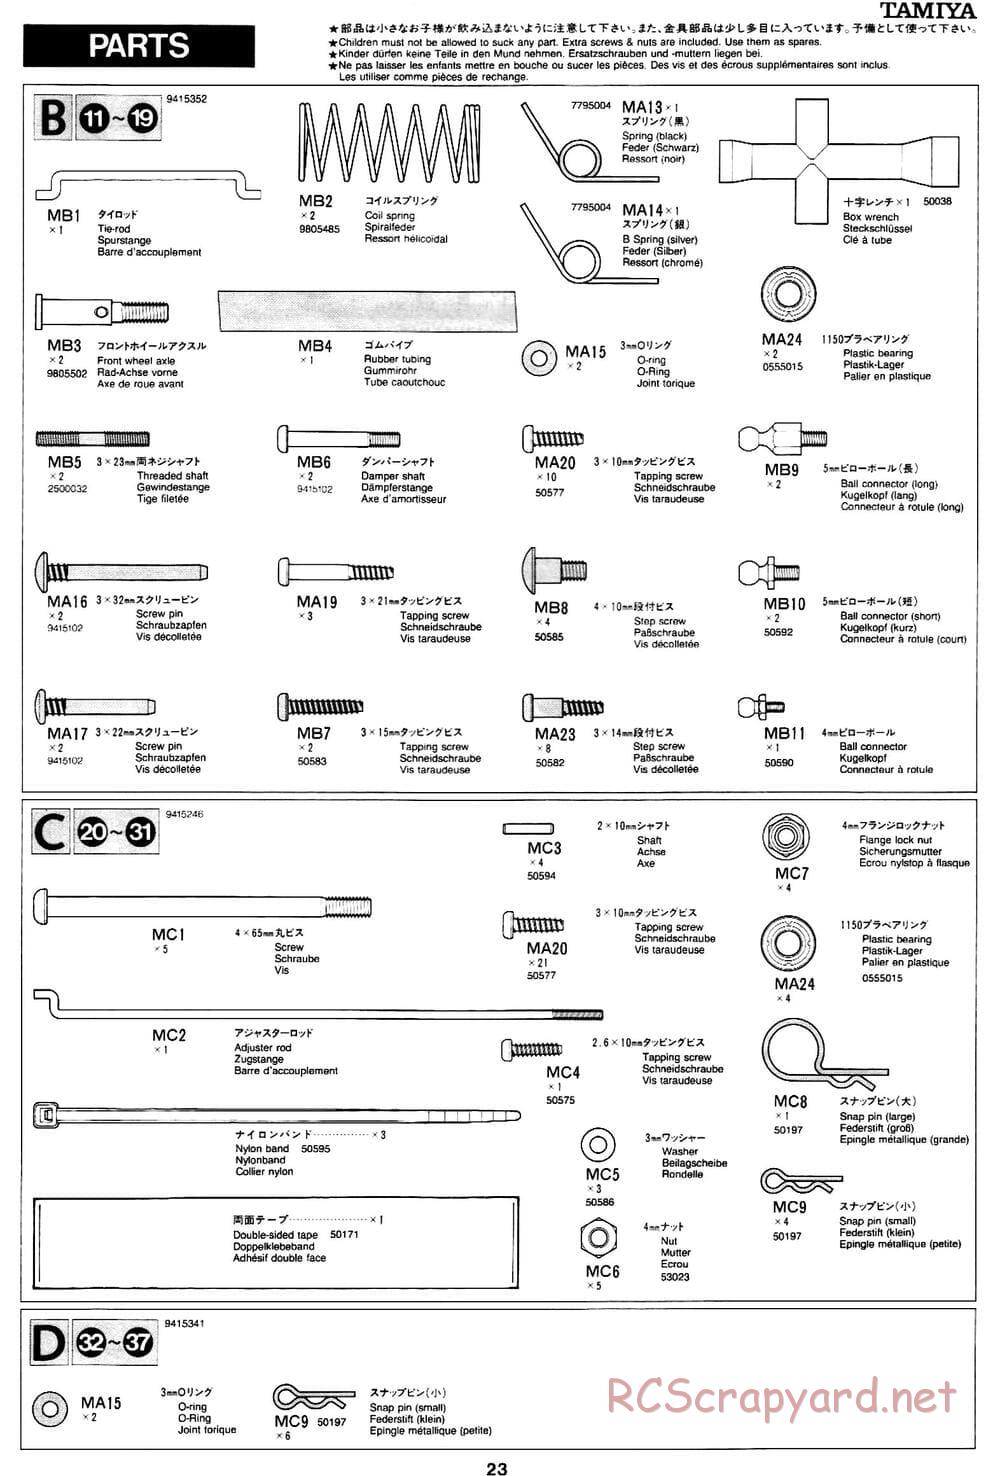 Tamiya - Porsche 911 Carrera - M02L Chassis - Manual - Page 23